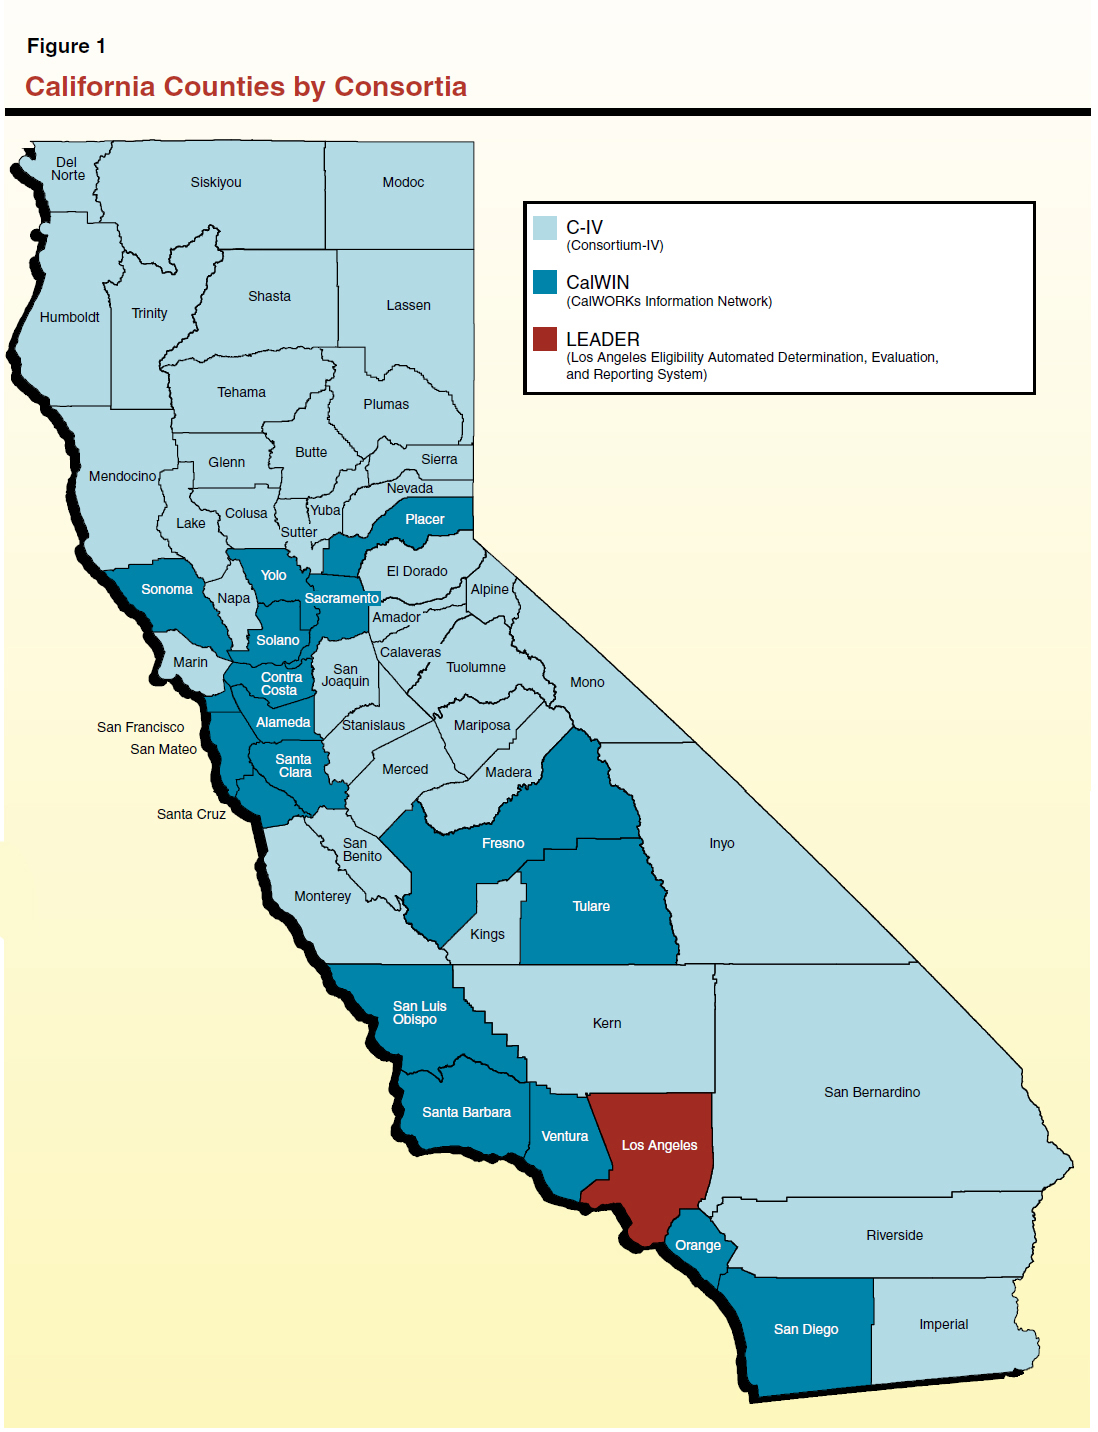 Figure 1 - California Counties by Consortia